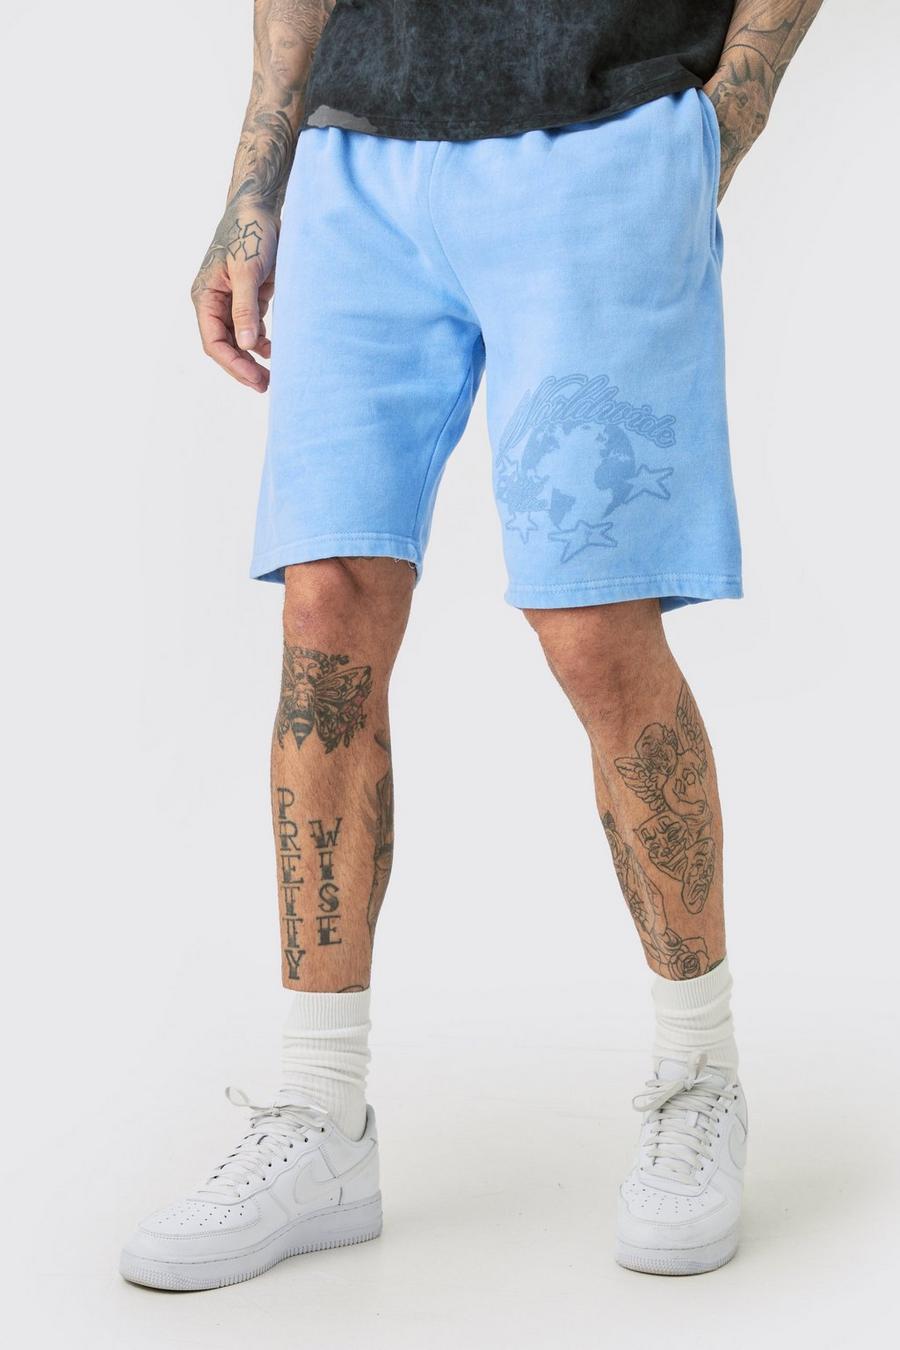 Pantalones cortos Tall oversize azules con estampado Dream Worldwide, Blue